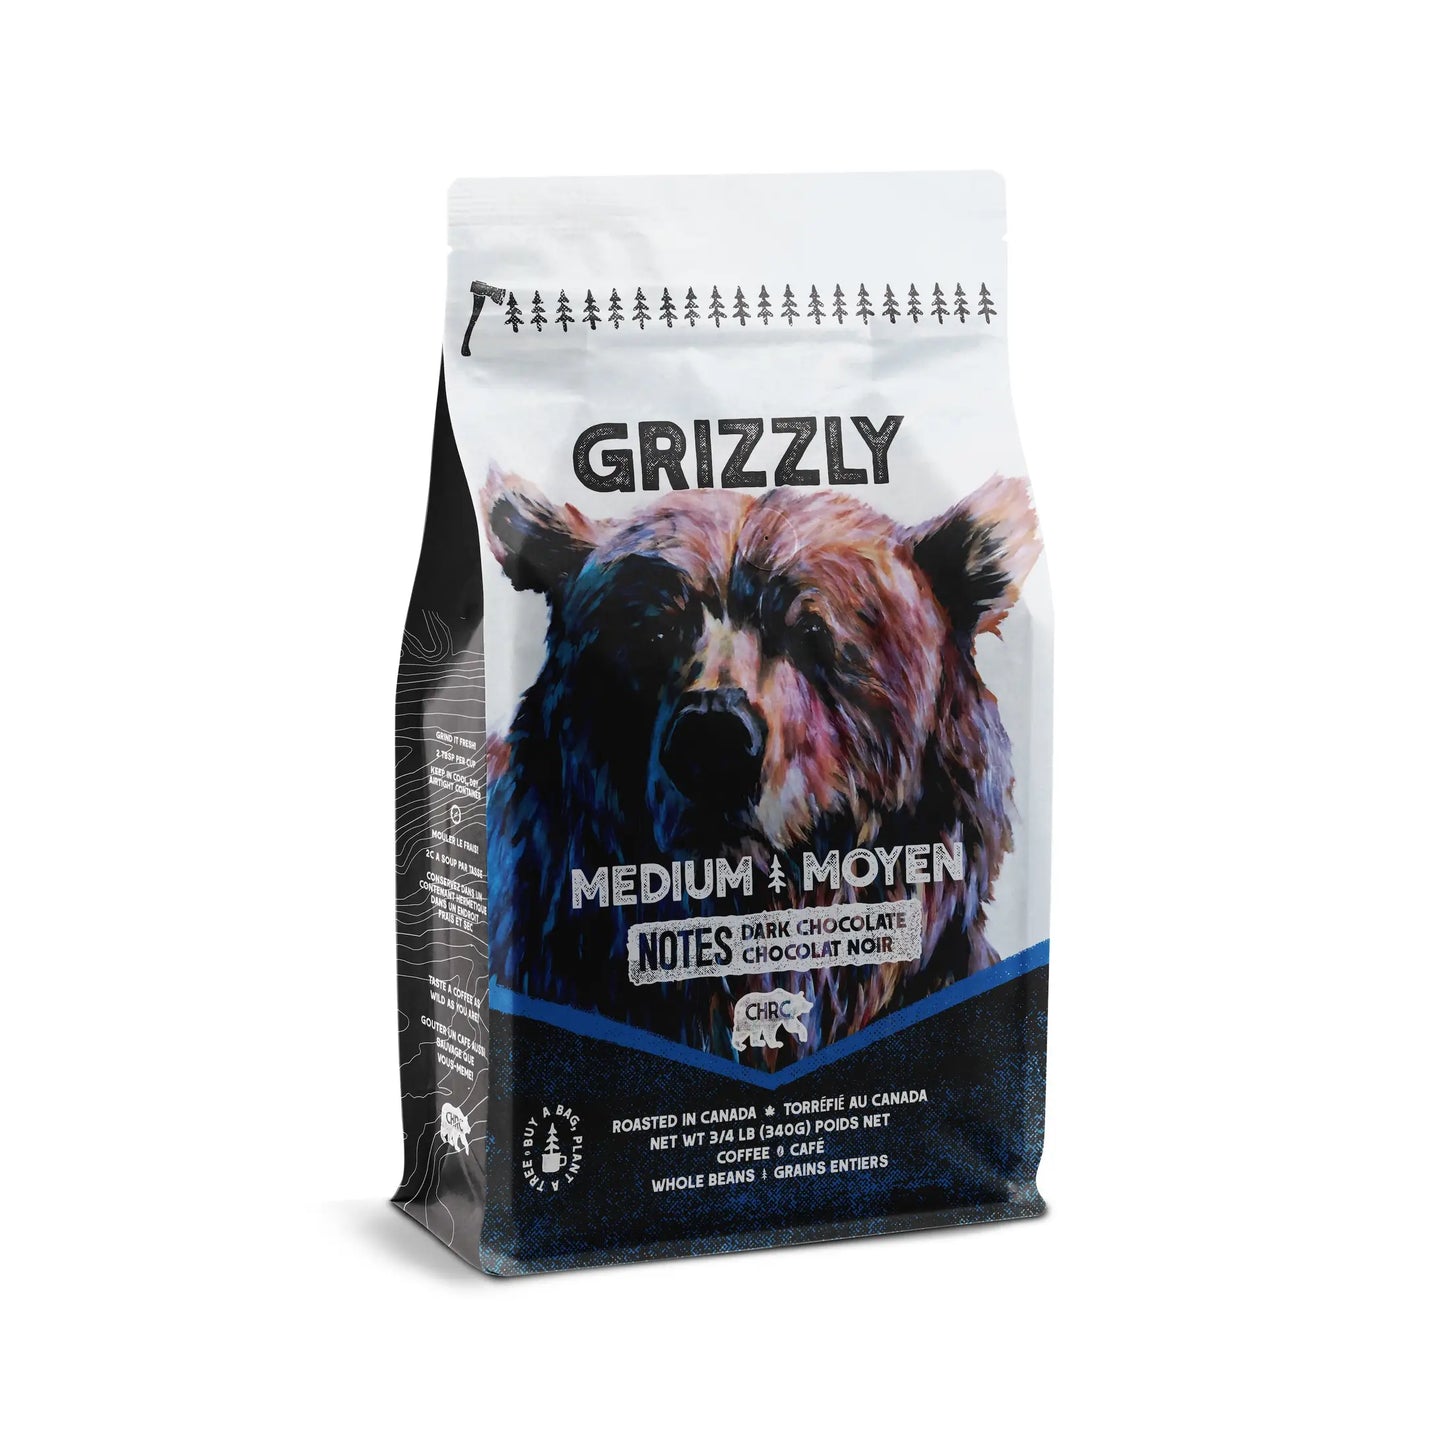 CHR - Grizzly Medium Coffee